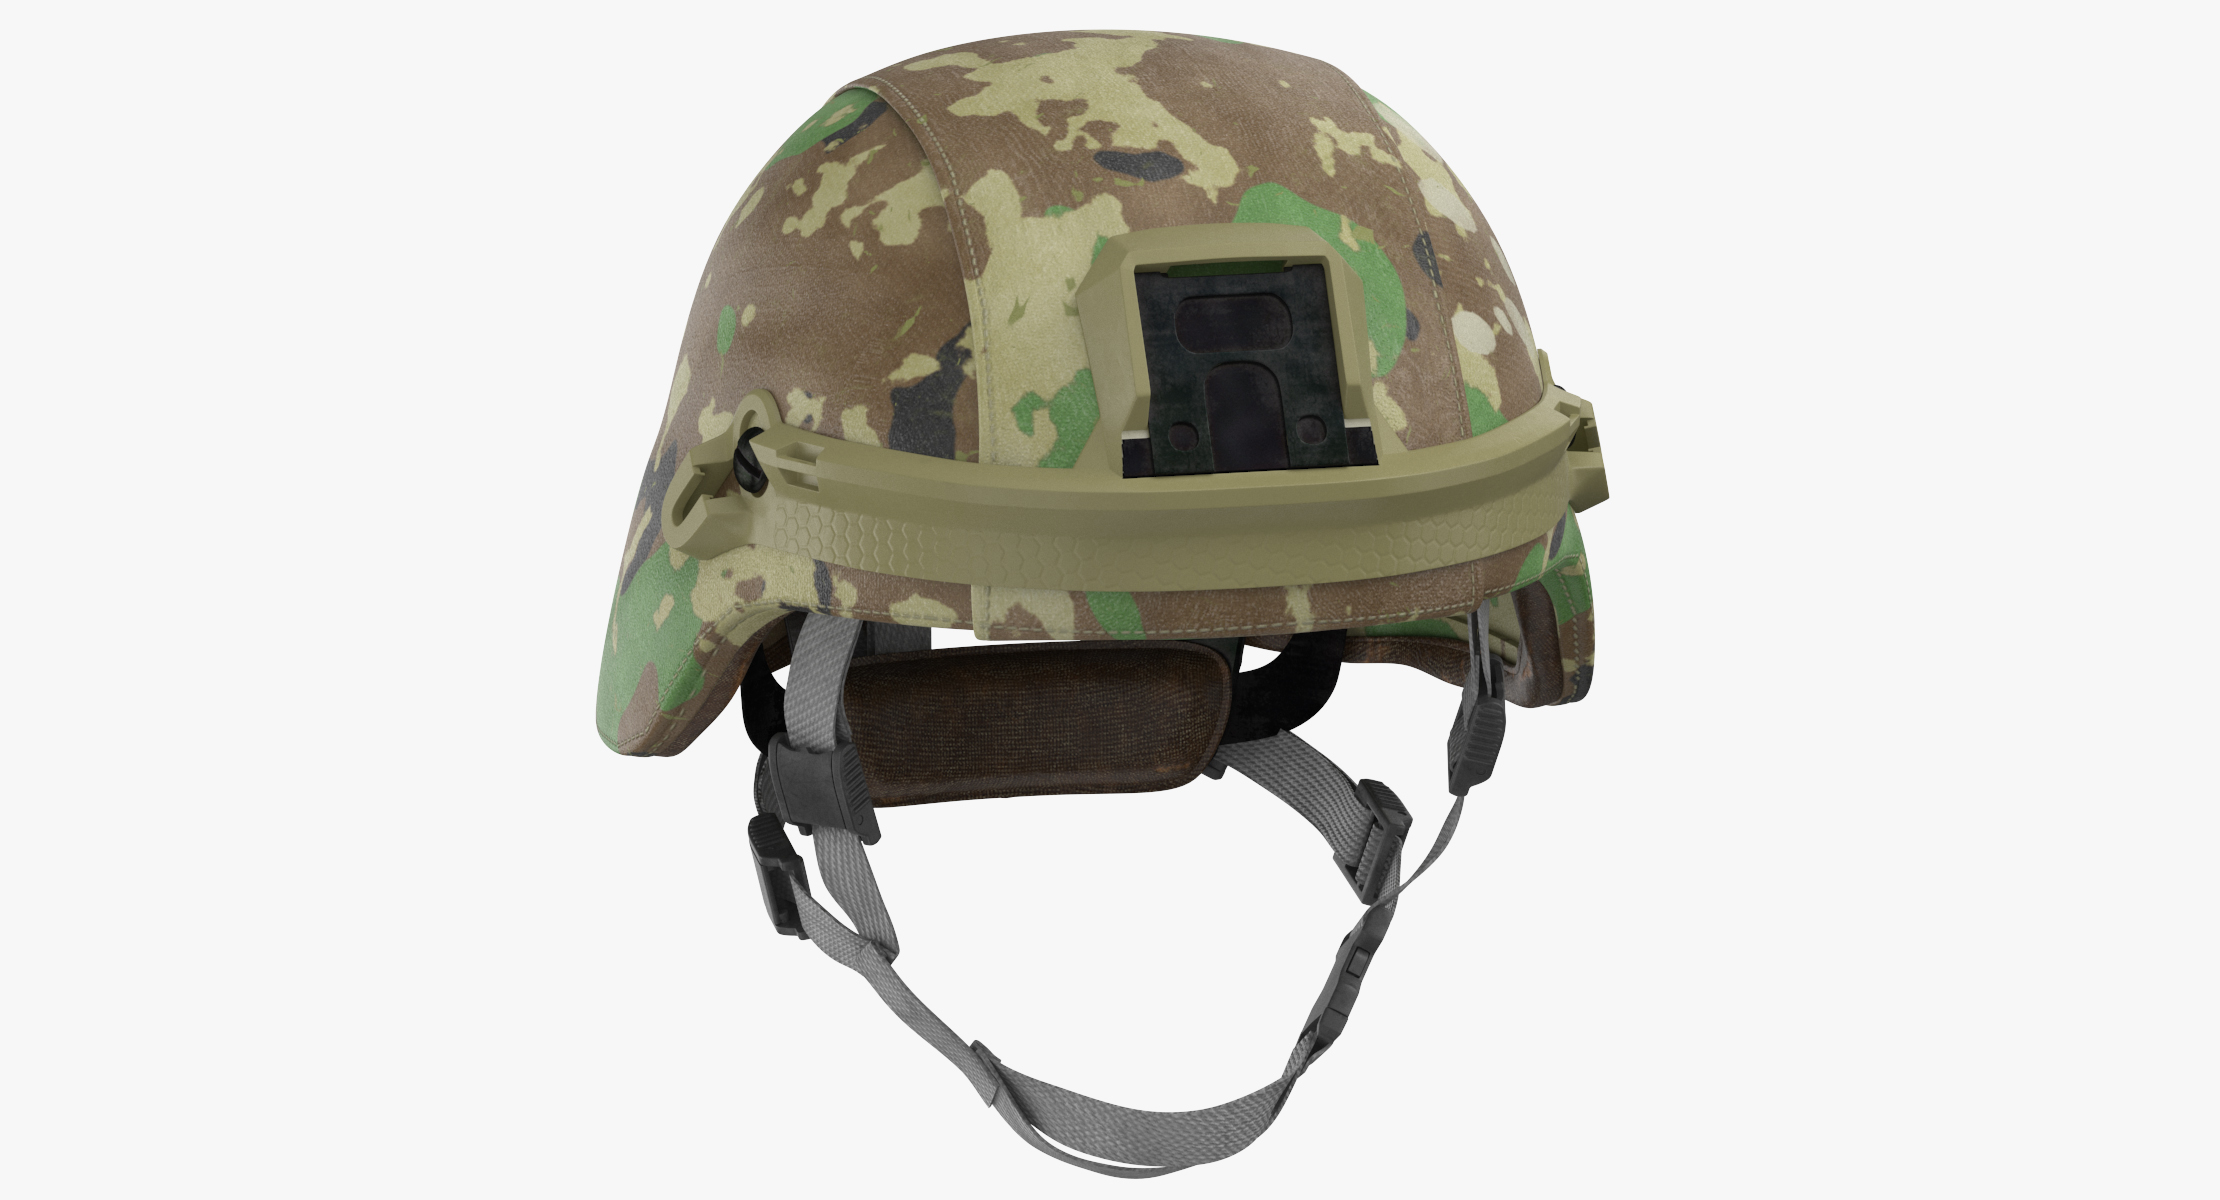 Army Helmet 3D Model Free Download